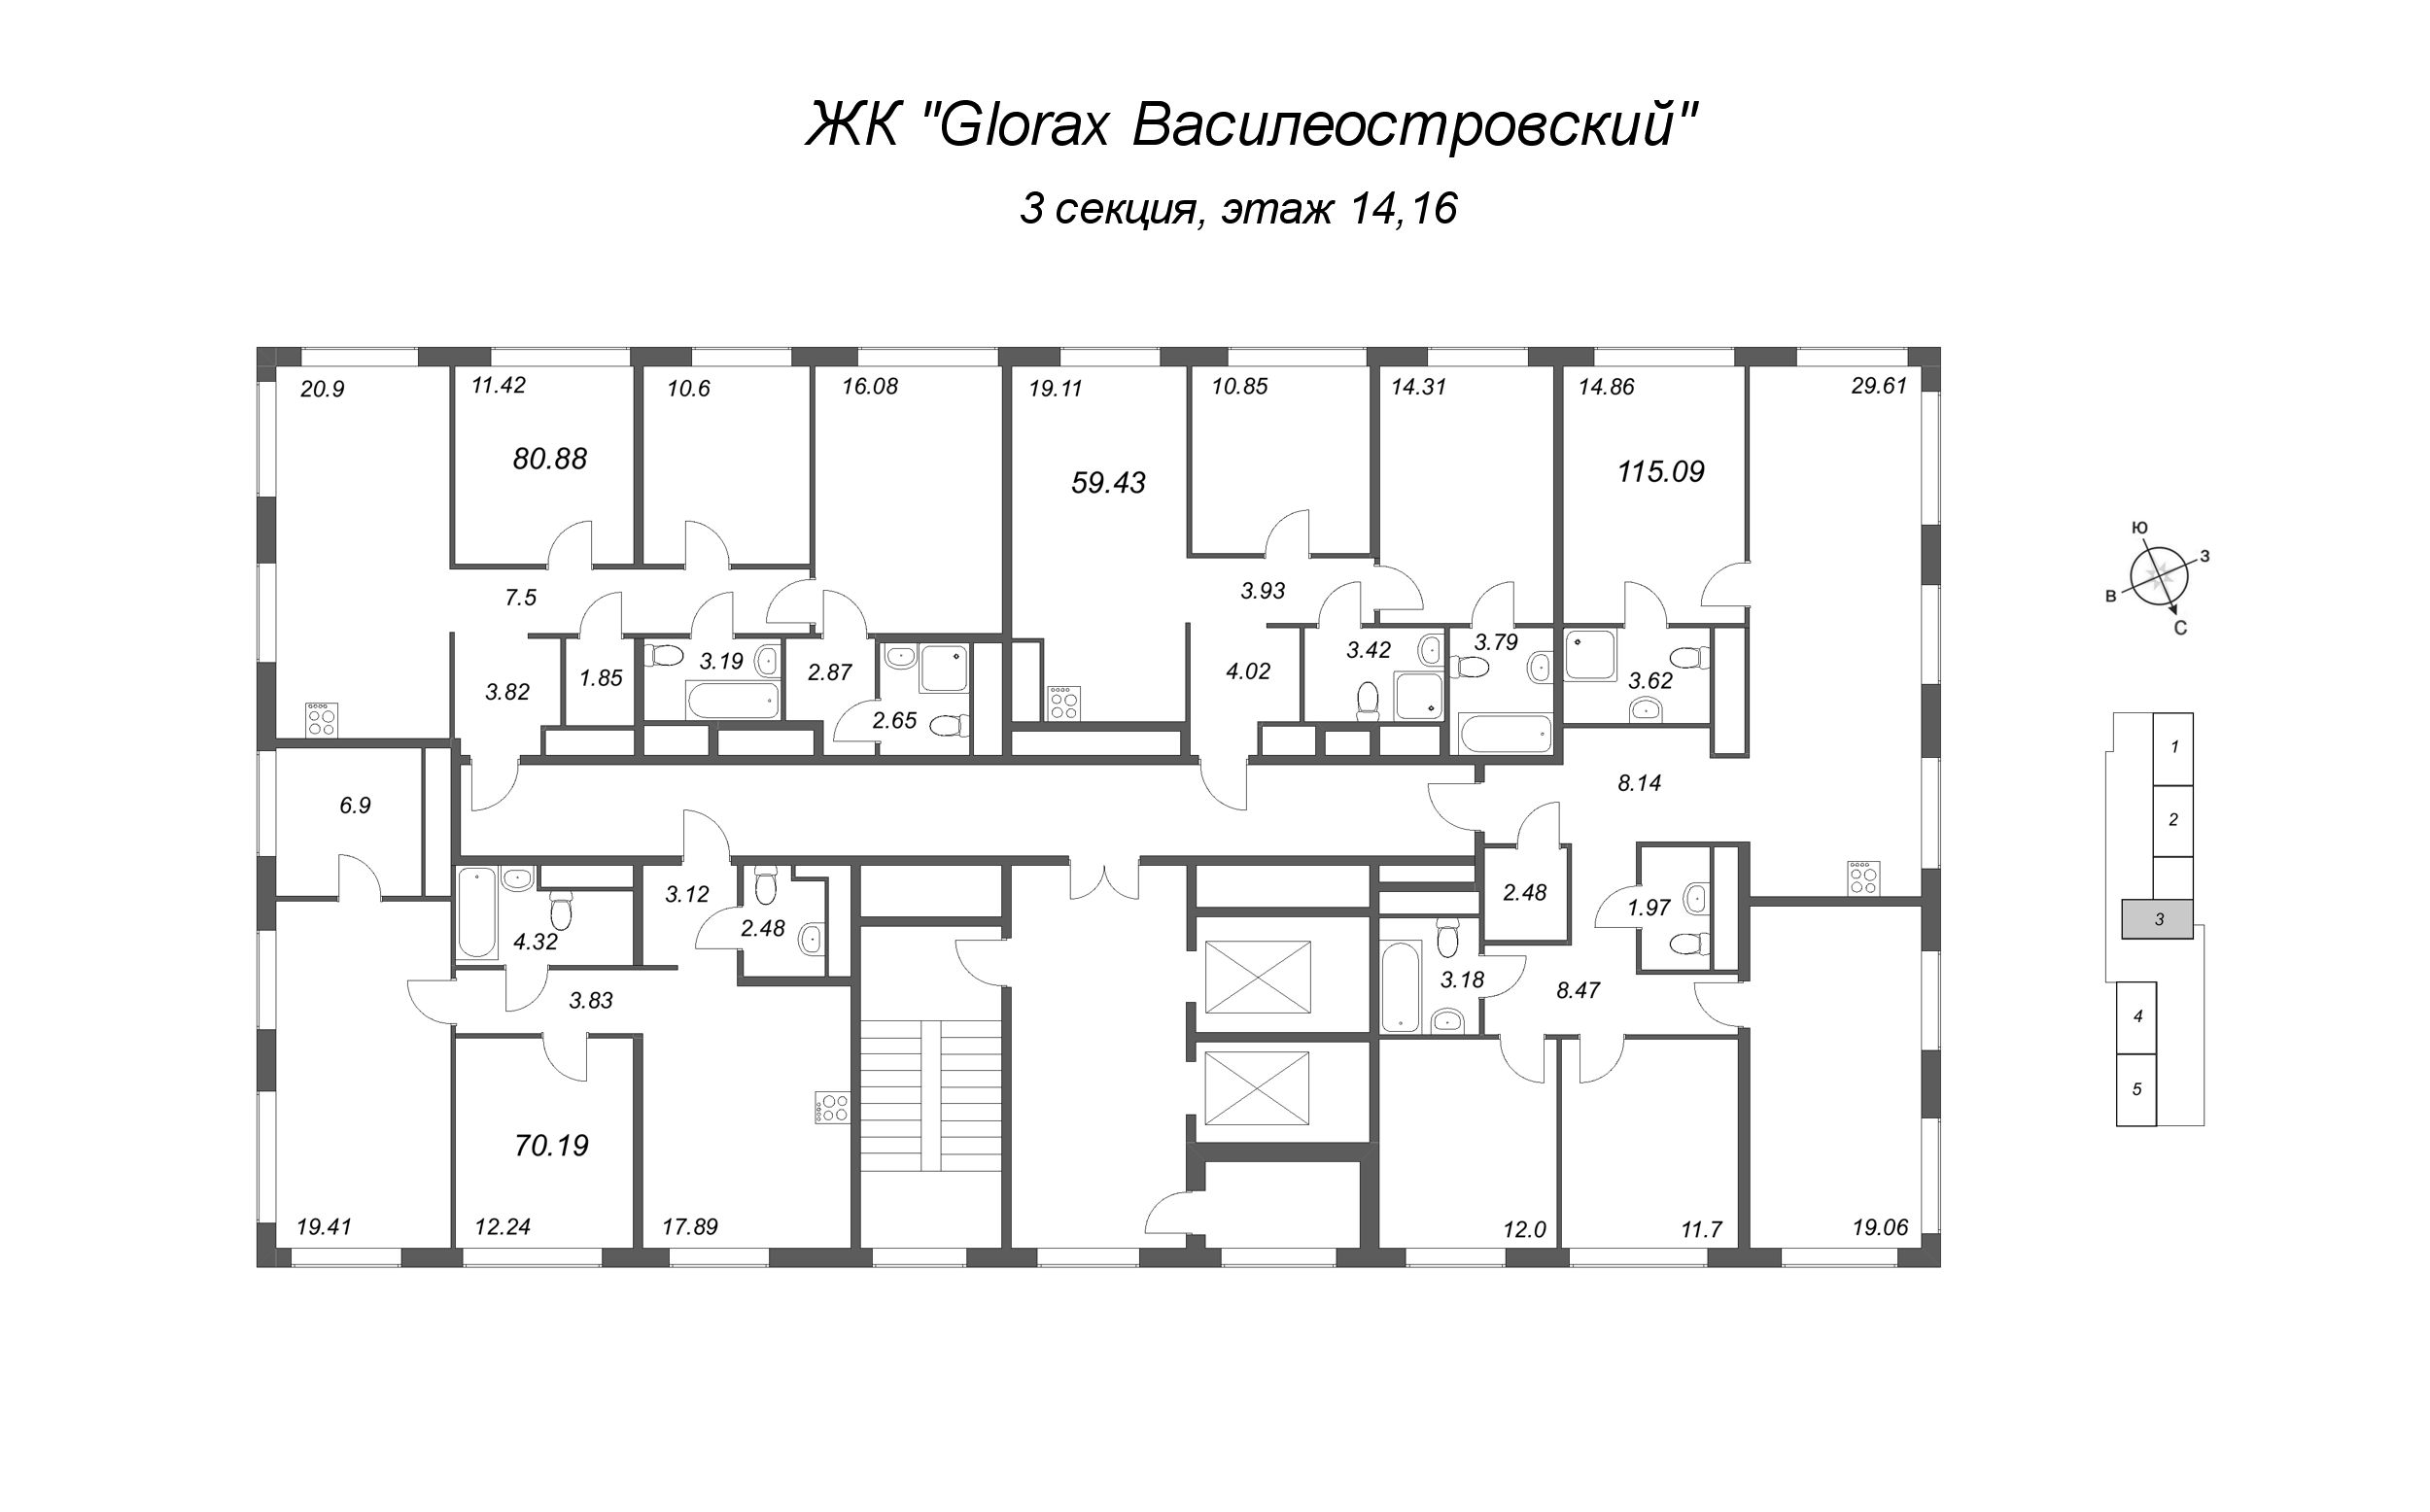 3-комнатная (Евро) квартира, 59.43 м² - планировка этажа